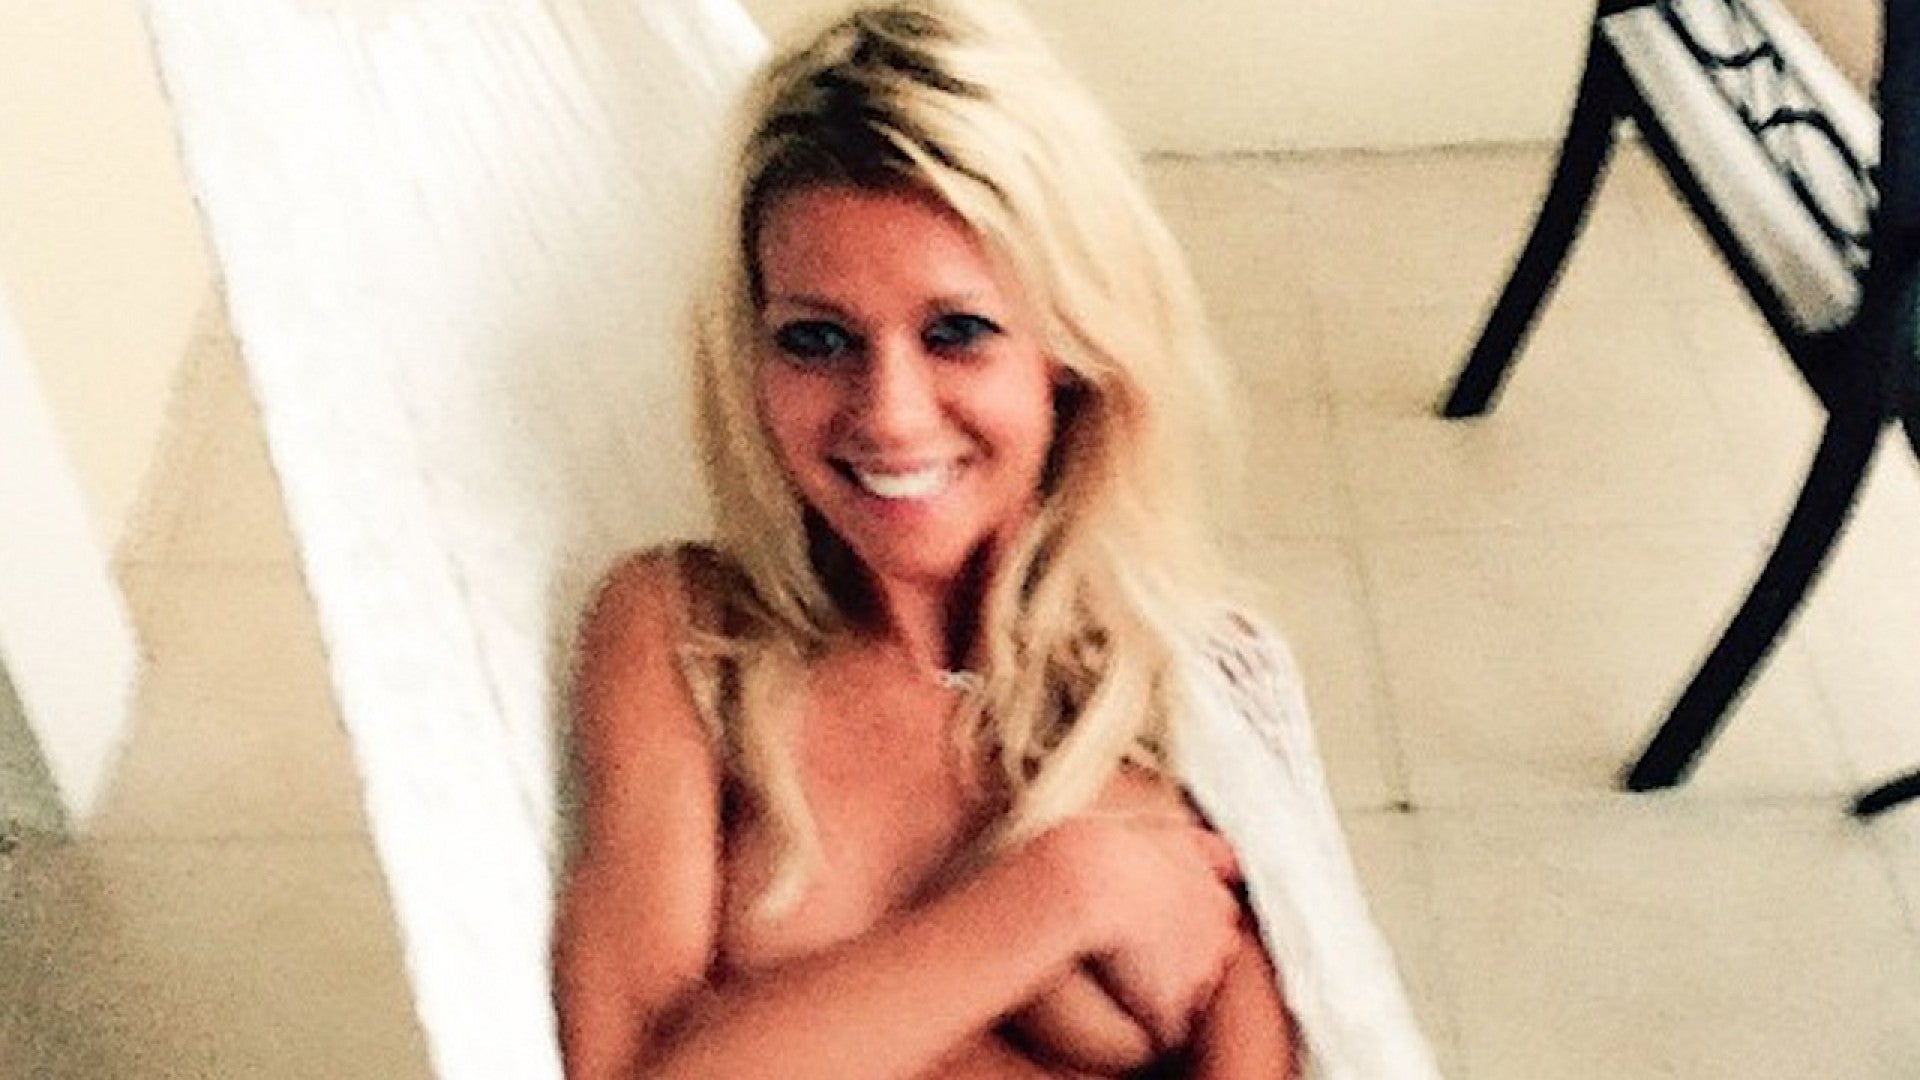 Tara reid sexy and nud - Hot Nude